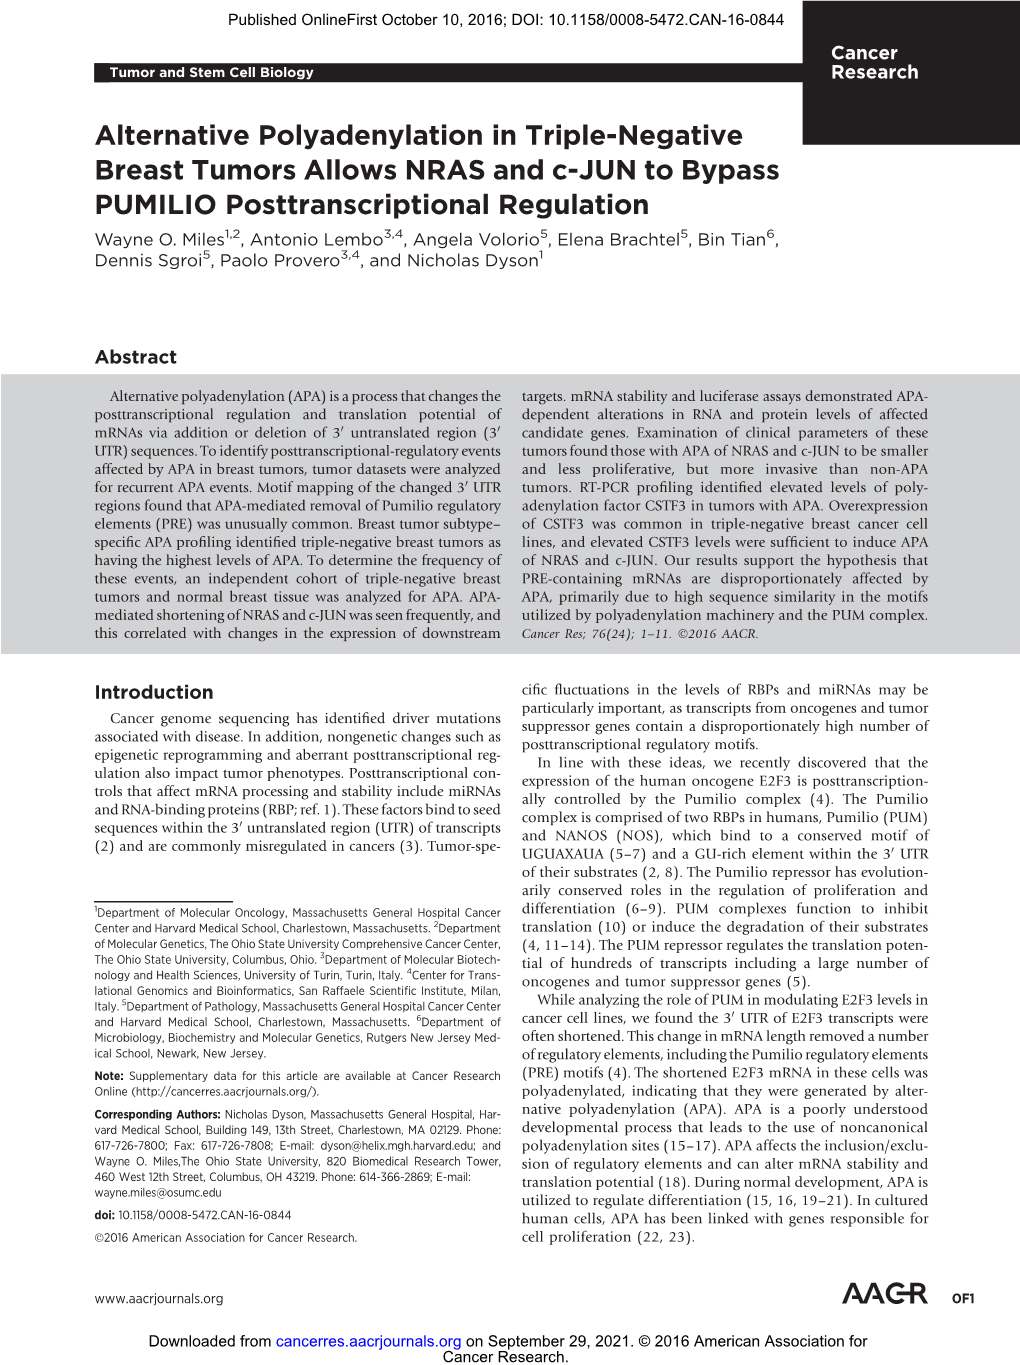 Alternative Polyadenylation in Triple-Negative Breast Tumors Allows NRAS and C-JUN to Bypass PUMILIO Posttranscriptional Regulation Wayne O